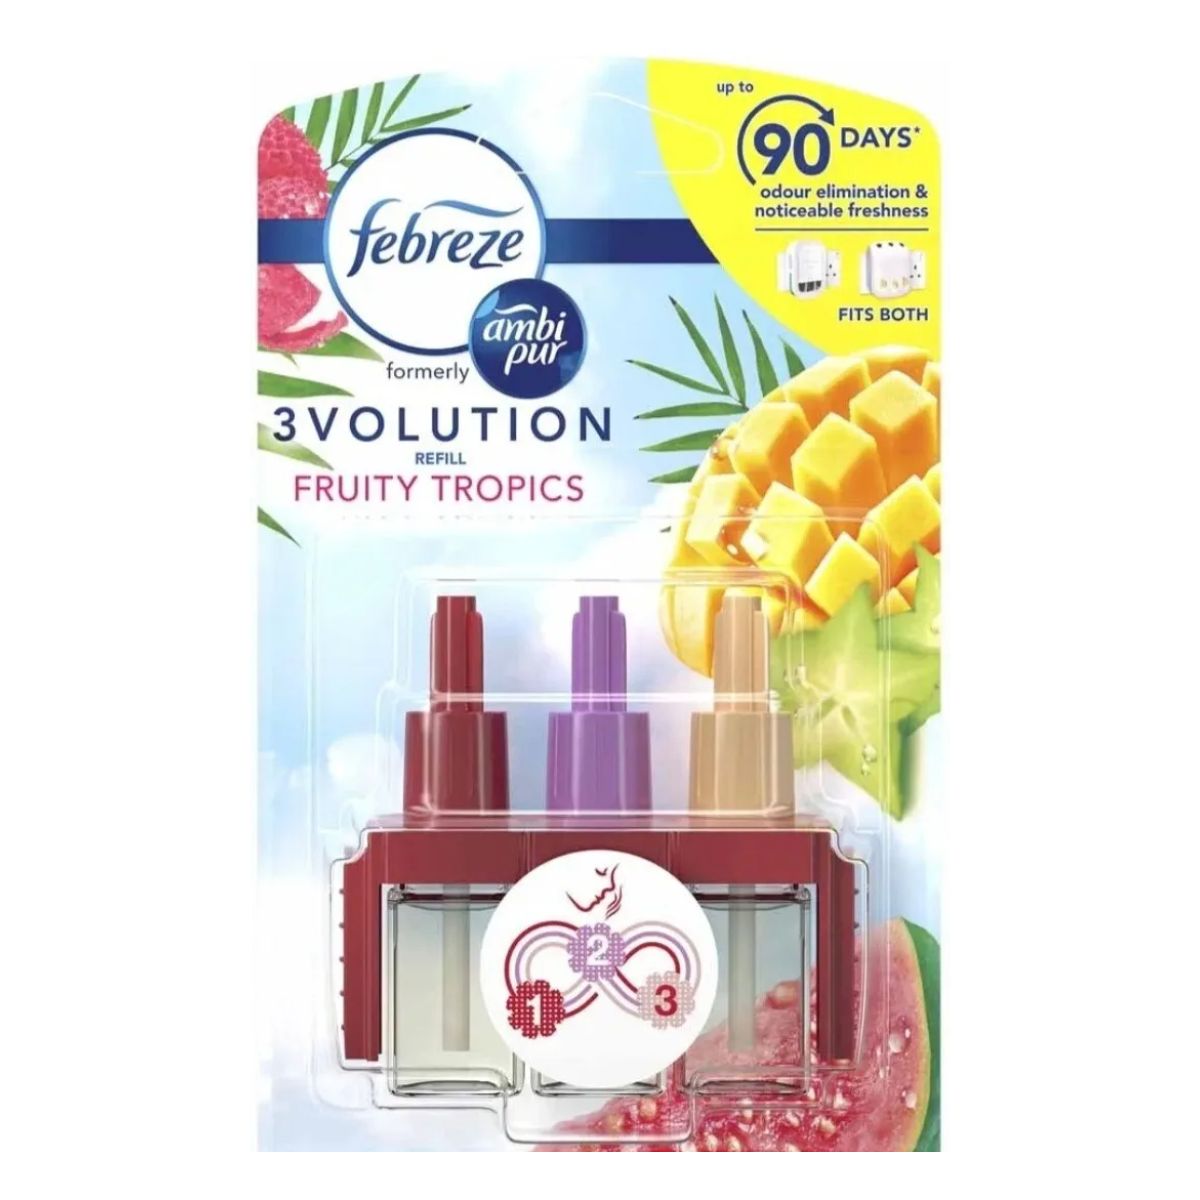 A pack of Febreze - 3Volution Refill Fruity Tropics - 20ml air fresheners.